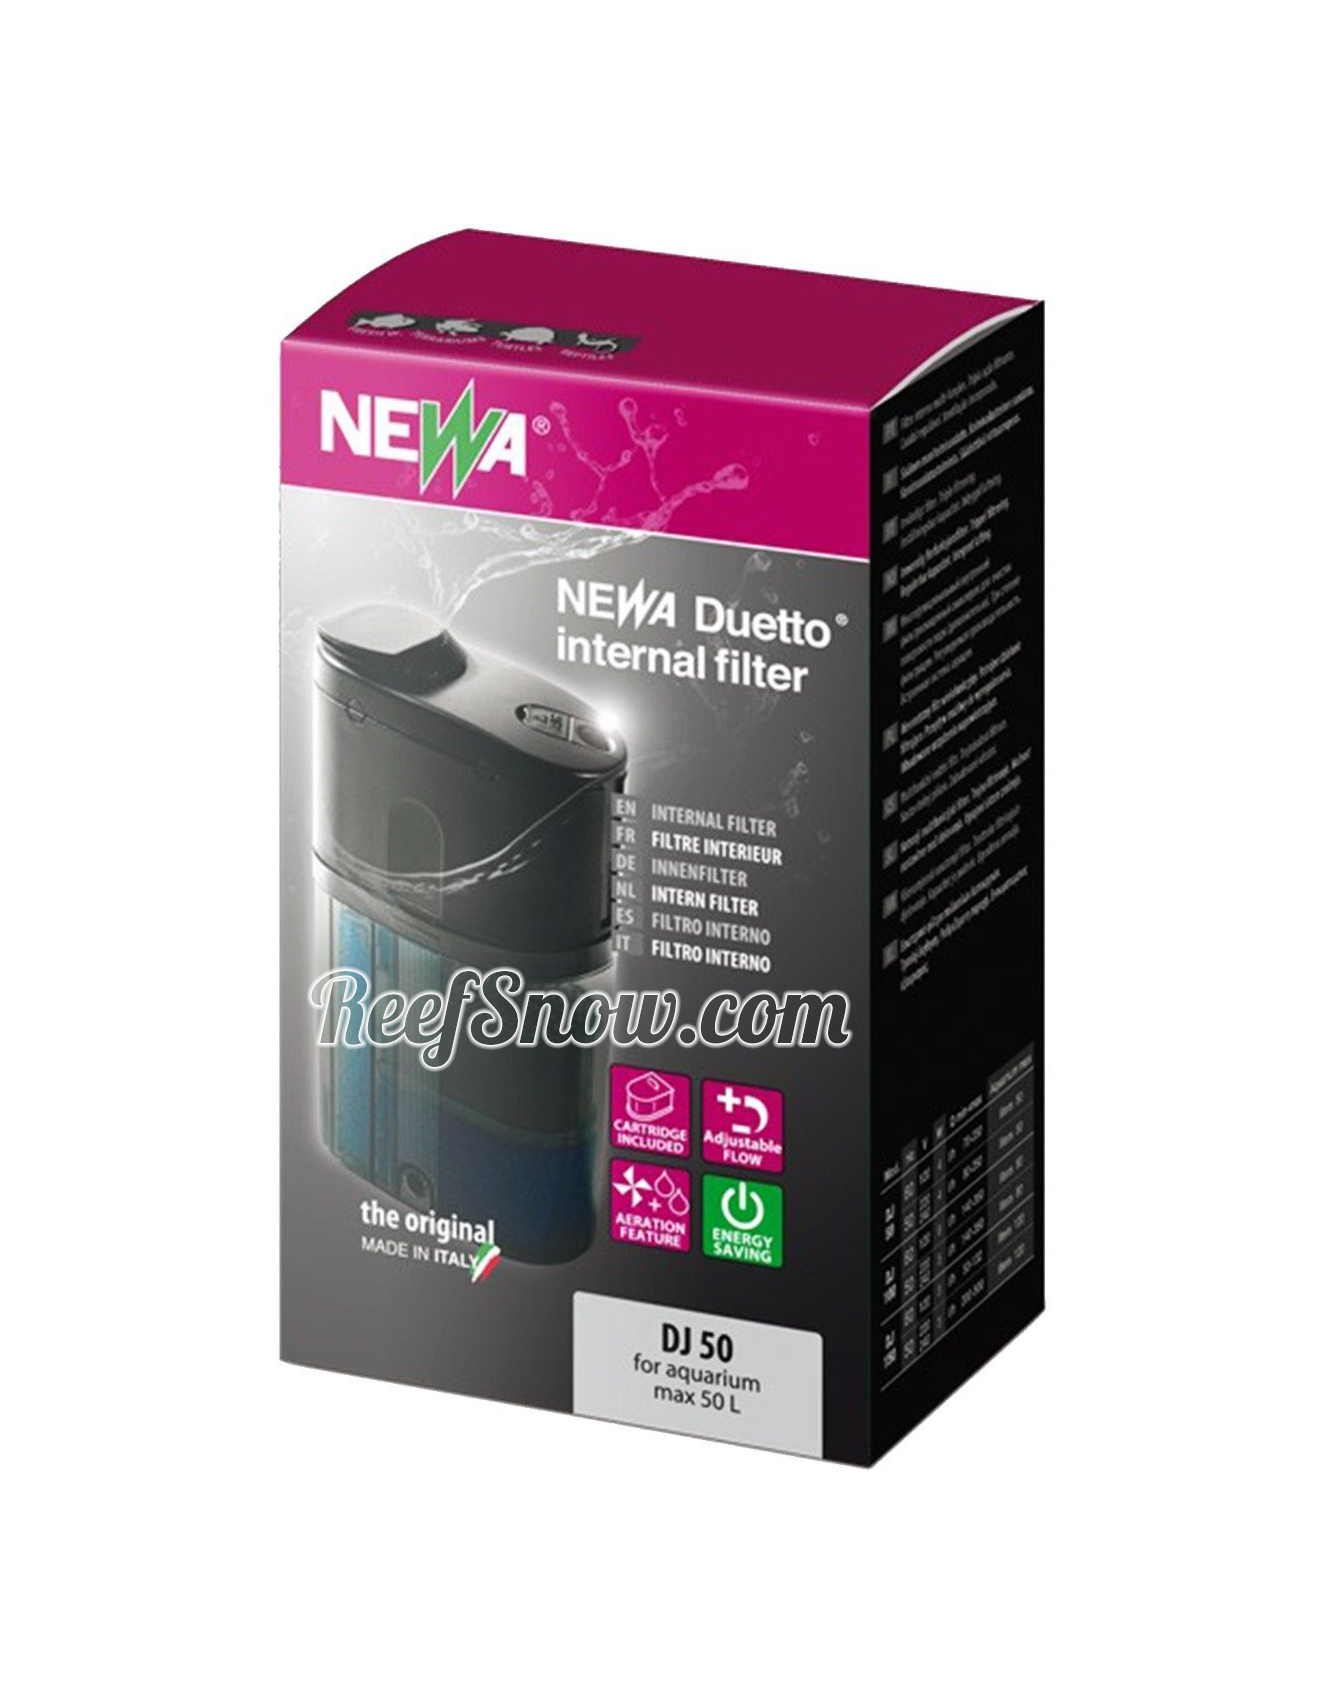 NEWA Duetto internal filter - DJ100